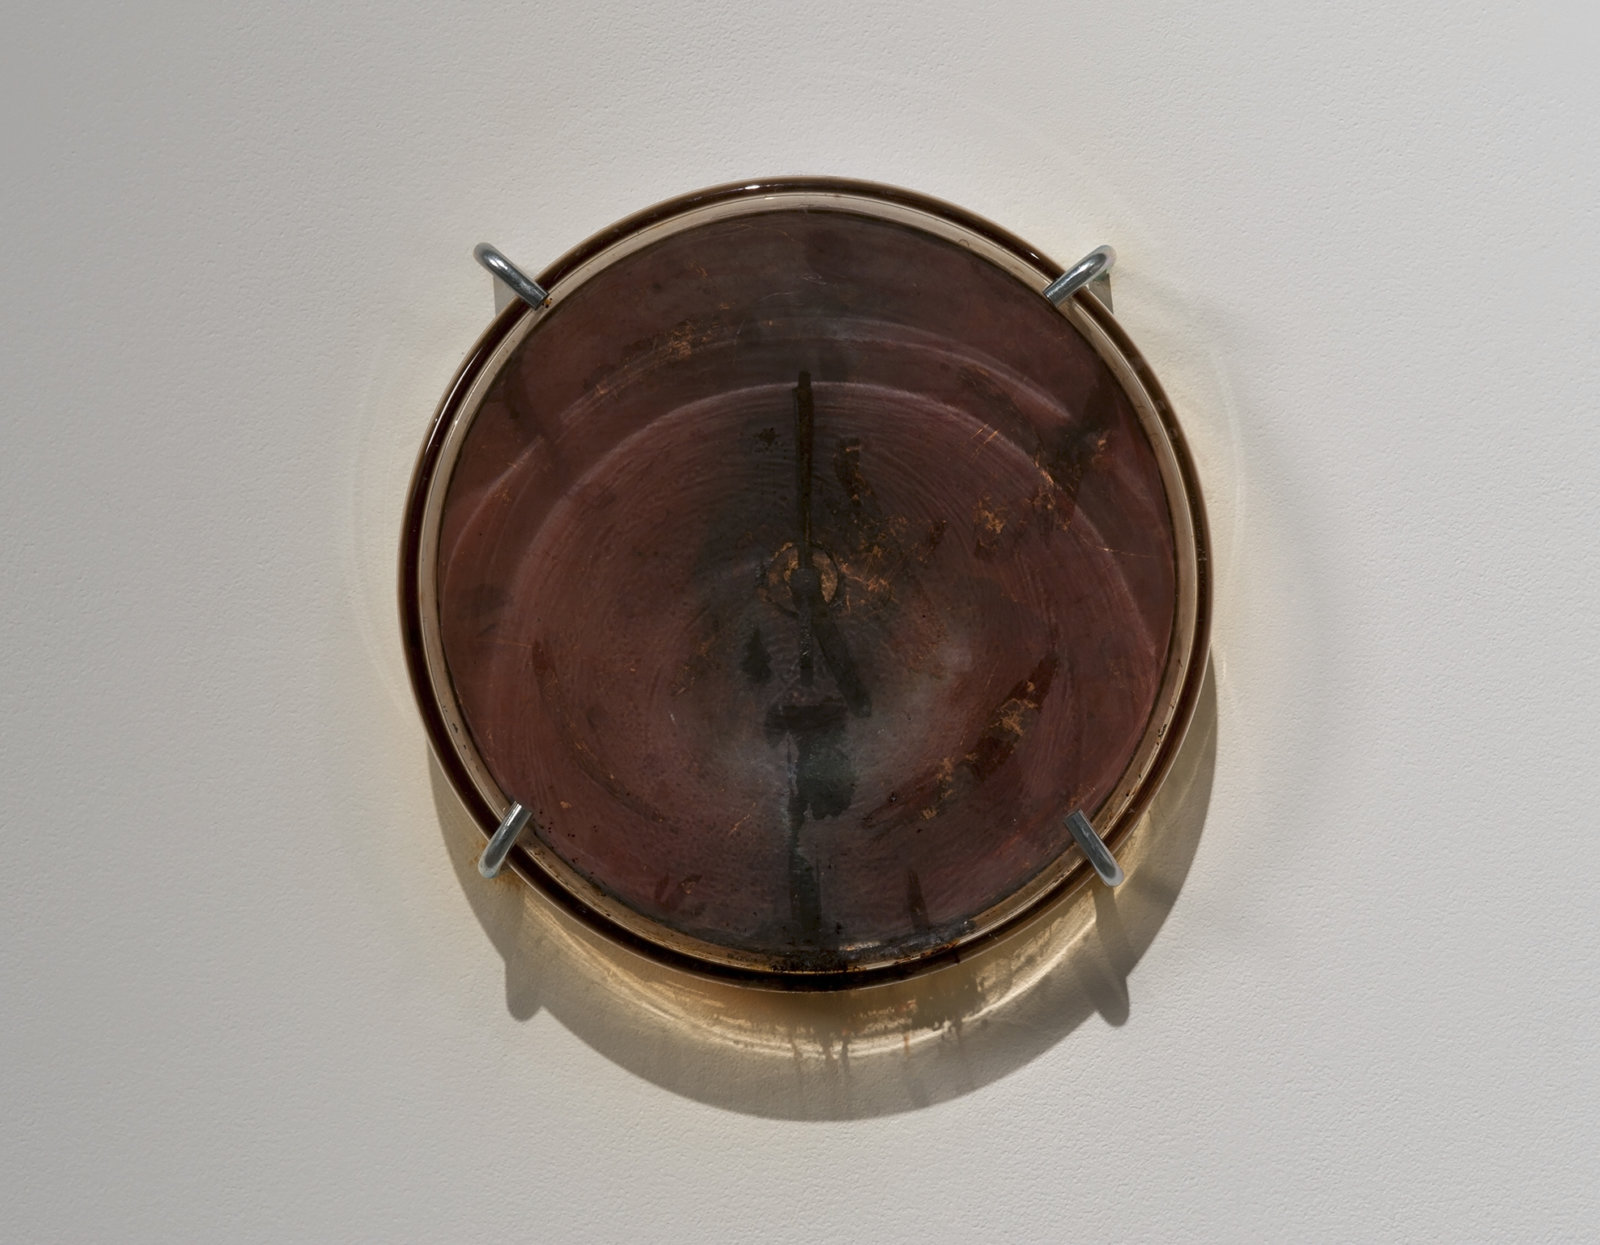 Kasper Feyrer, Sublimation Clock, 2012, iodine crystals, silver leaf, lampblack, glass, acrylic, metal clock hands, quartz clock movement, 12 x 12 x 3 in. (30 x 30 x 7 cm)